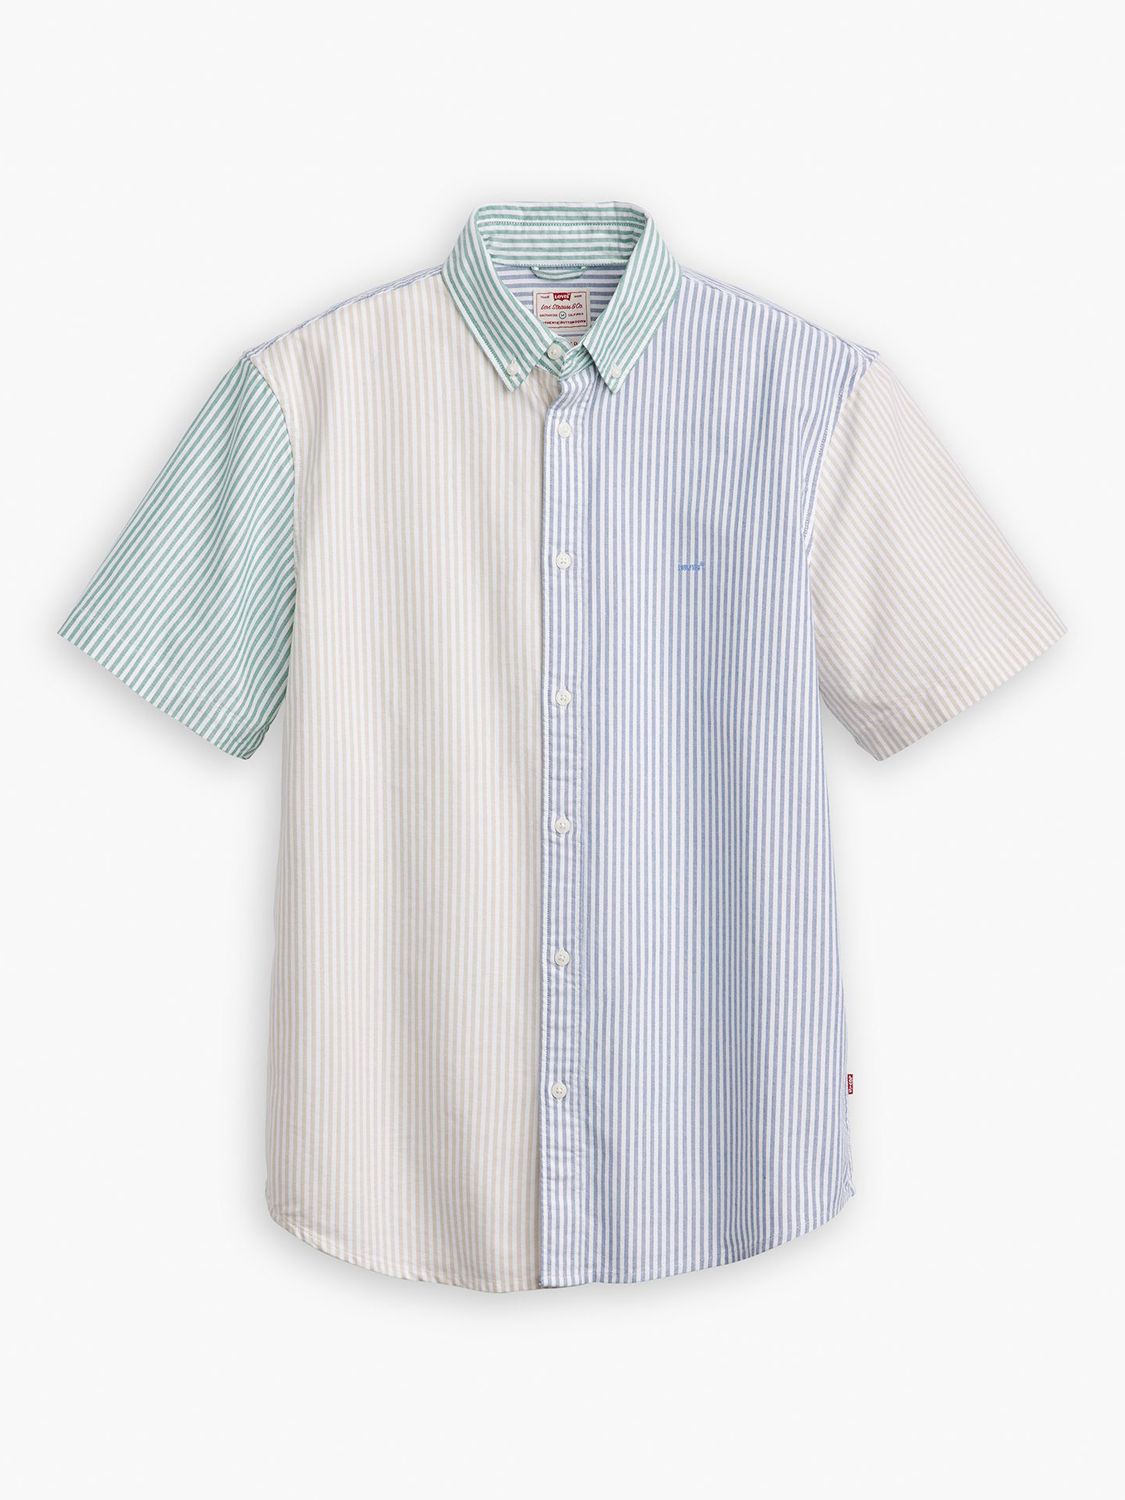 Buy Levi's Authentic Stripe Button Down Short Sleeve Shirt, White/Multi Online at johnlewis.com